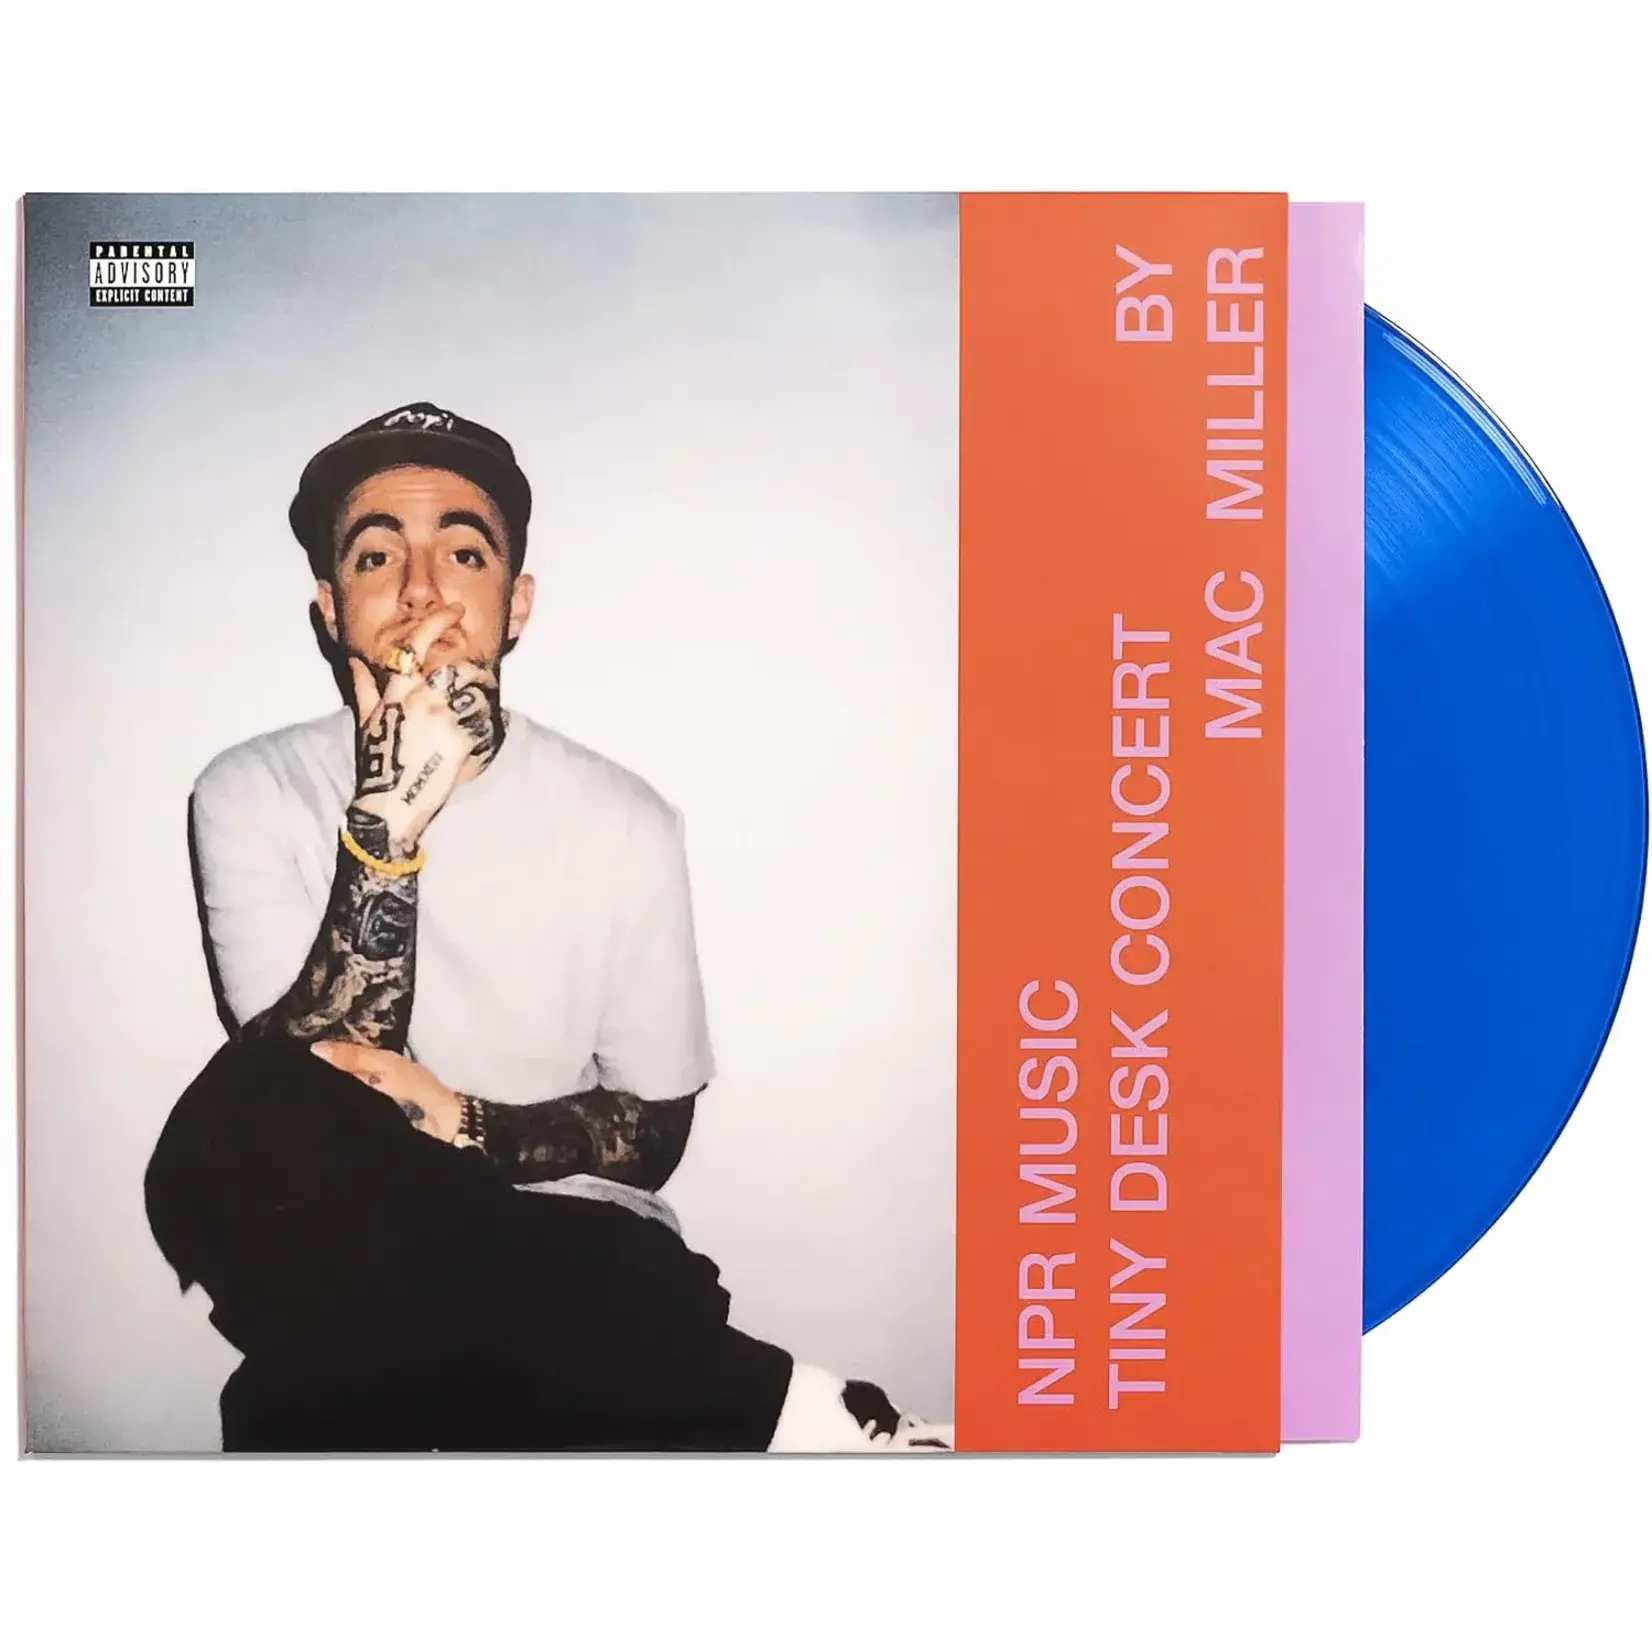 [New] Mac Miller - NPR Music Tiny Desk Concert (blue vinyl)